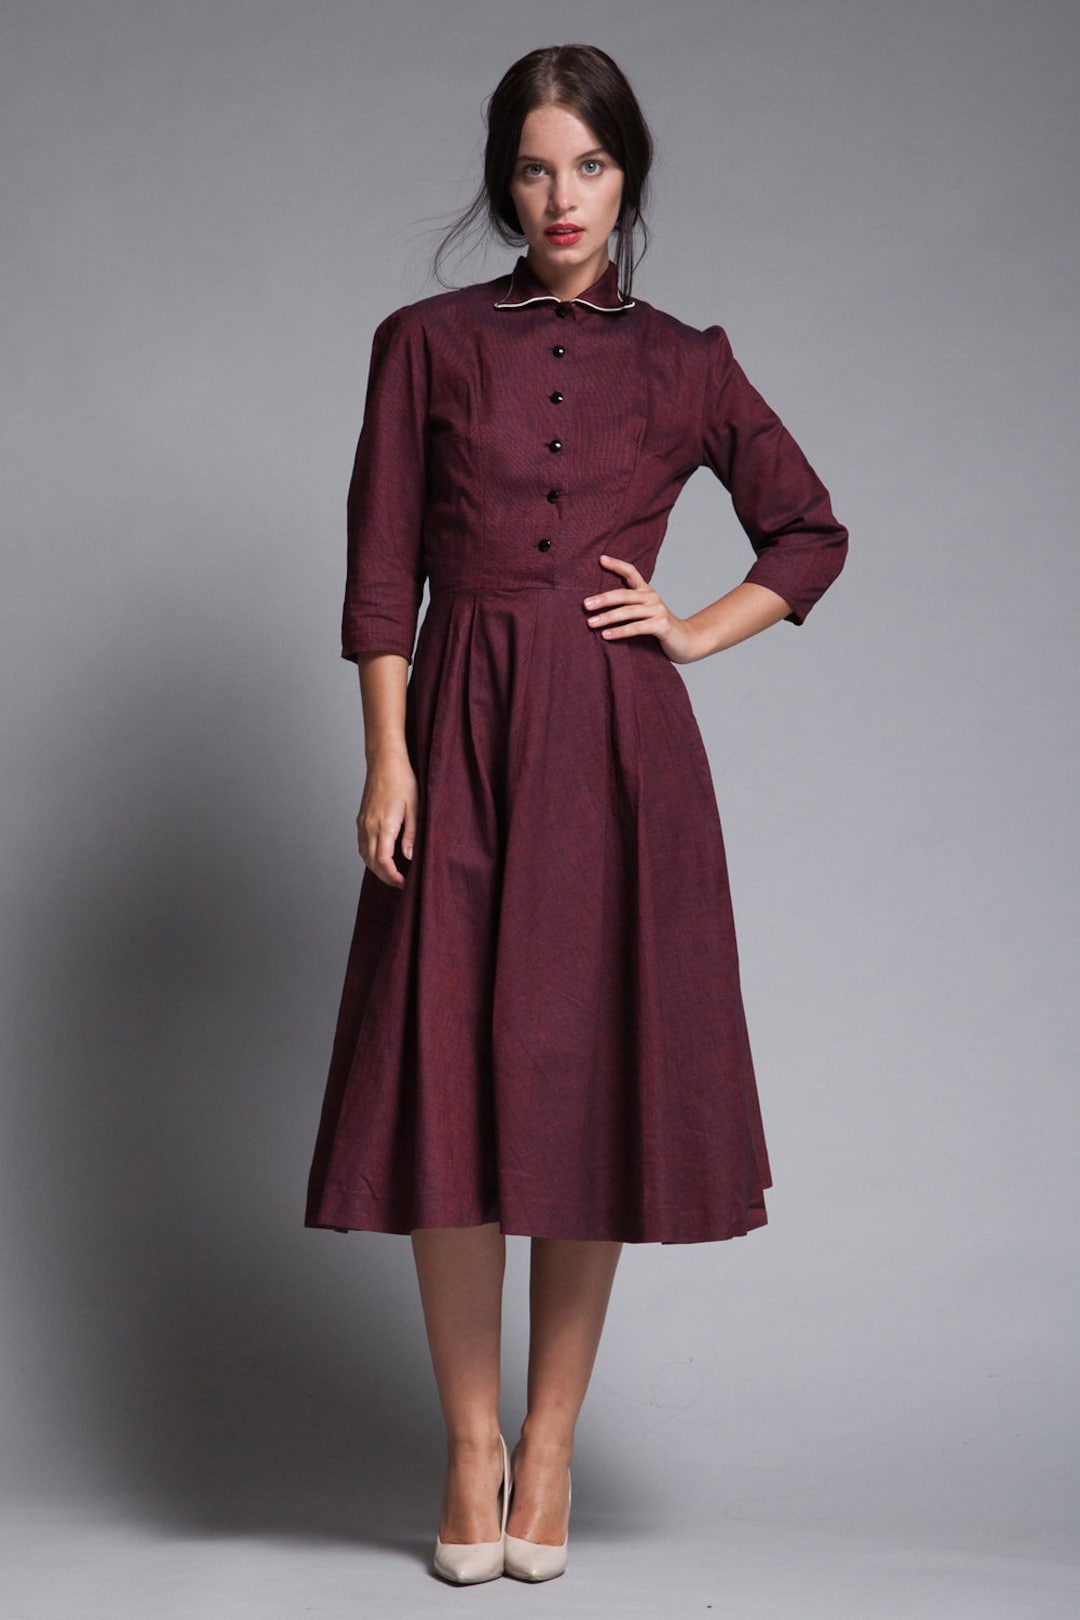 Shirtwaist Dress Midi Burgundy Red Pleated Skirt 3/4 Sleeves - Etsy